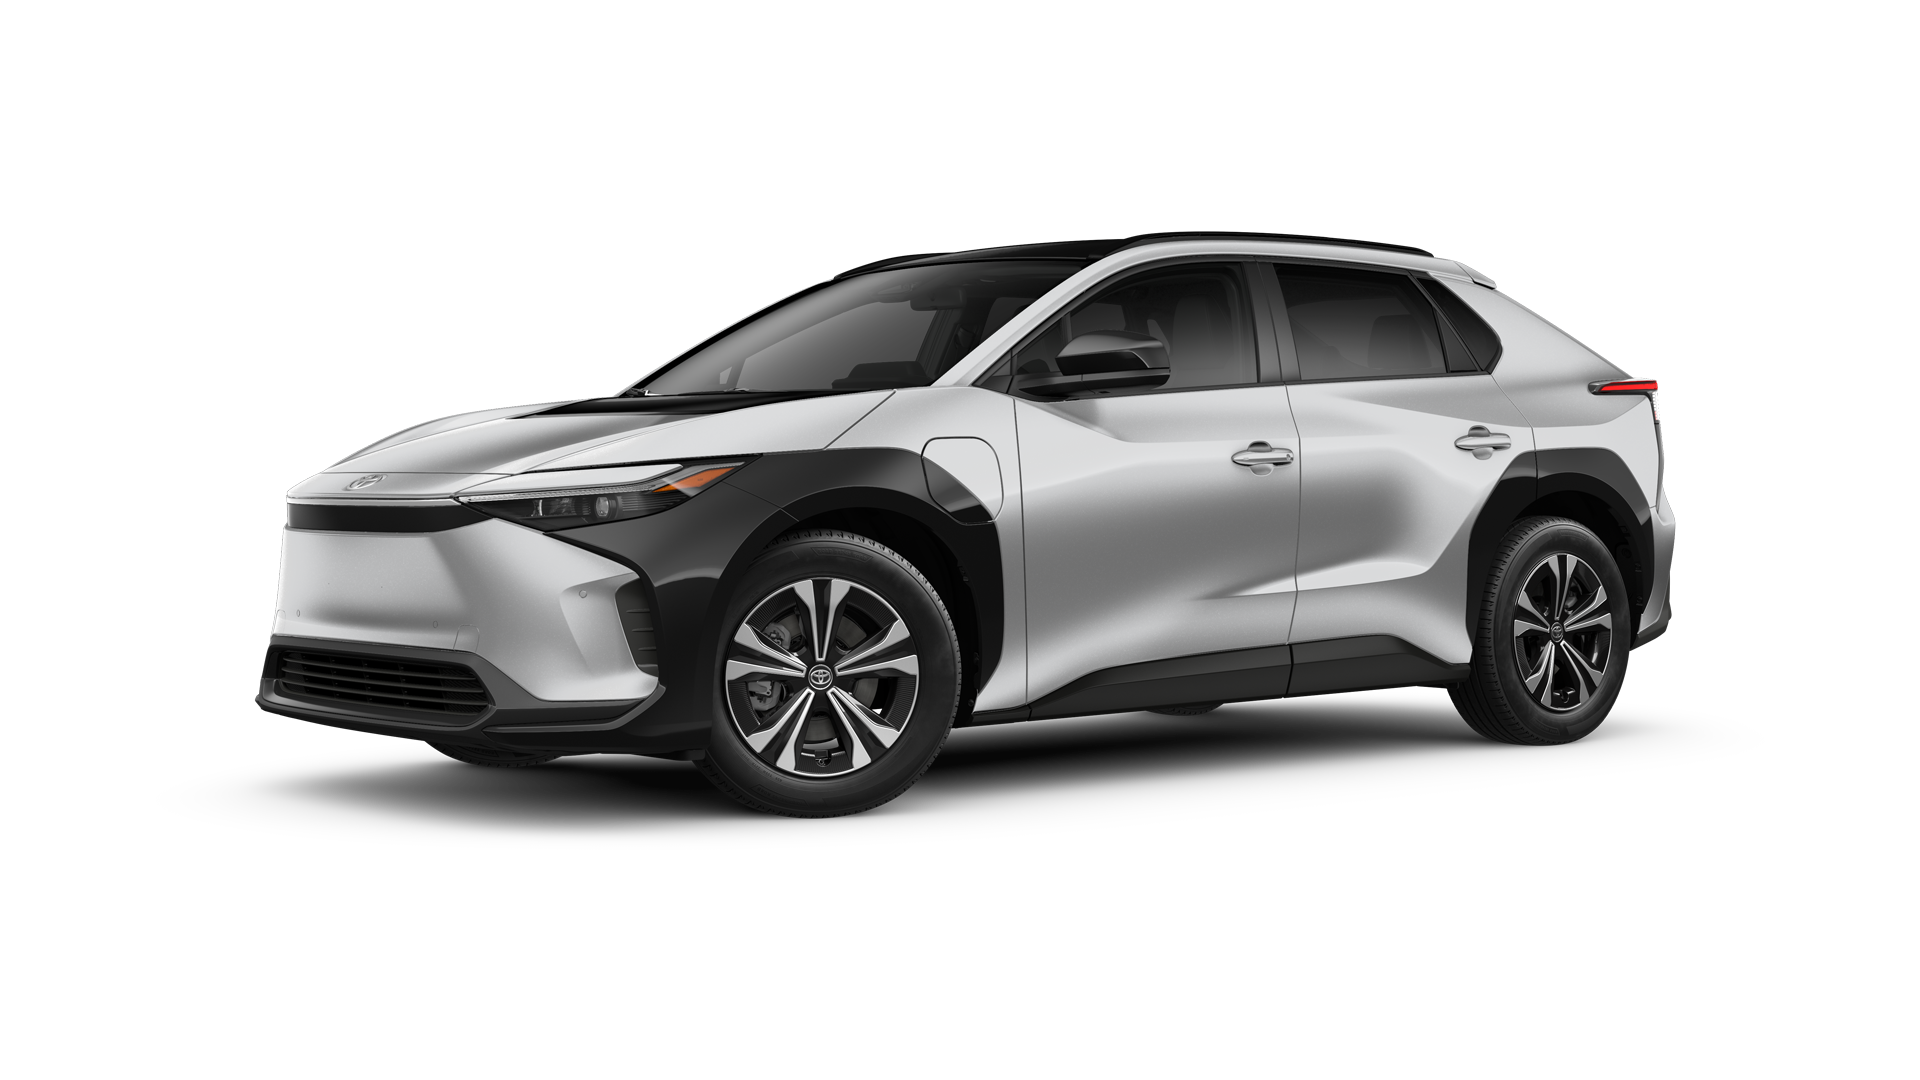 2023 Toyota bZ4X in Elemental Silver Metallic*.